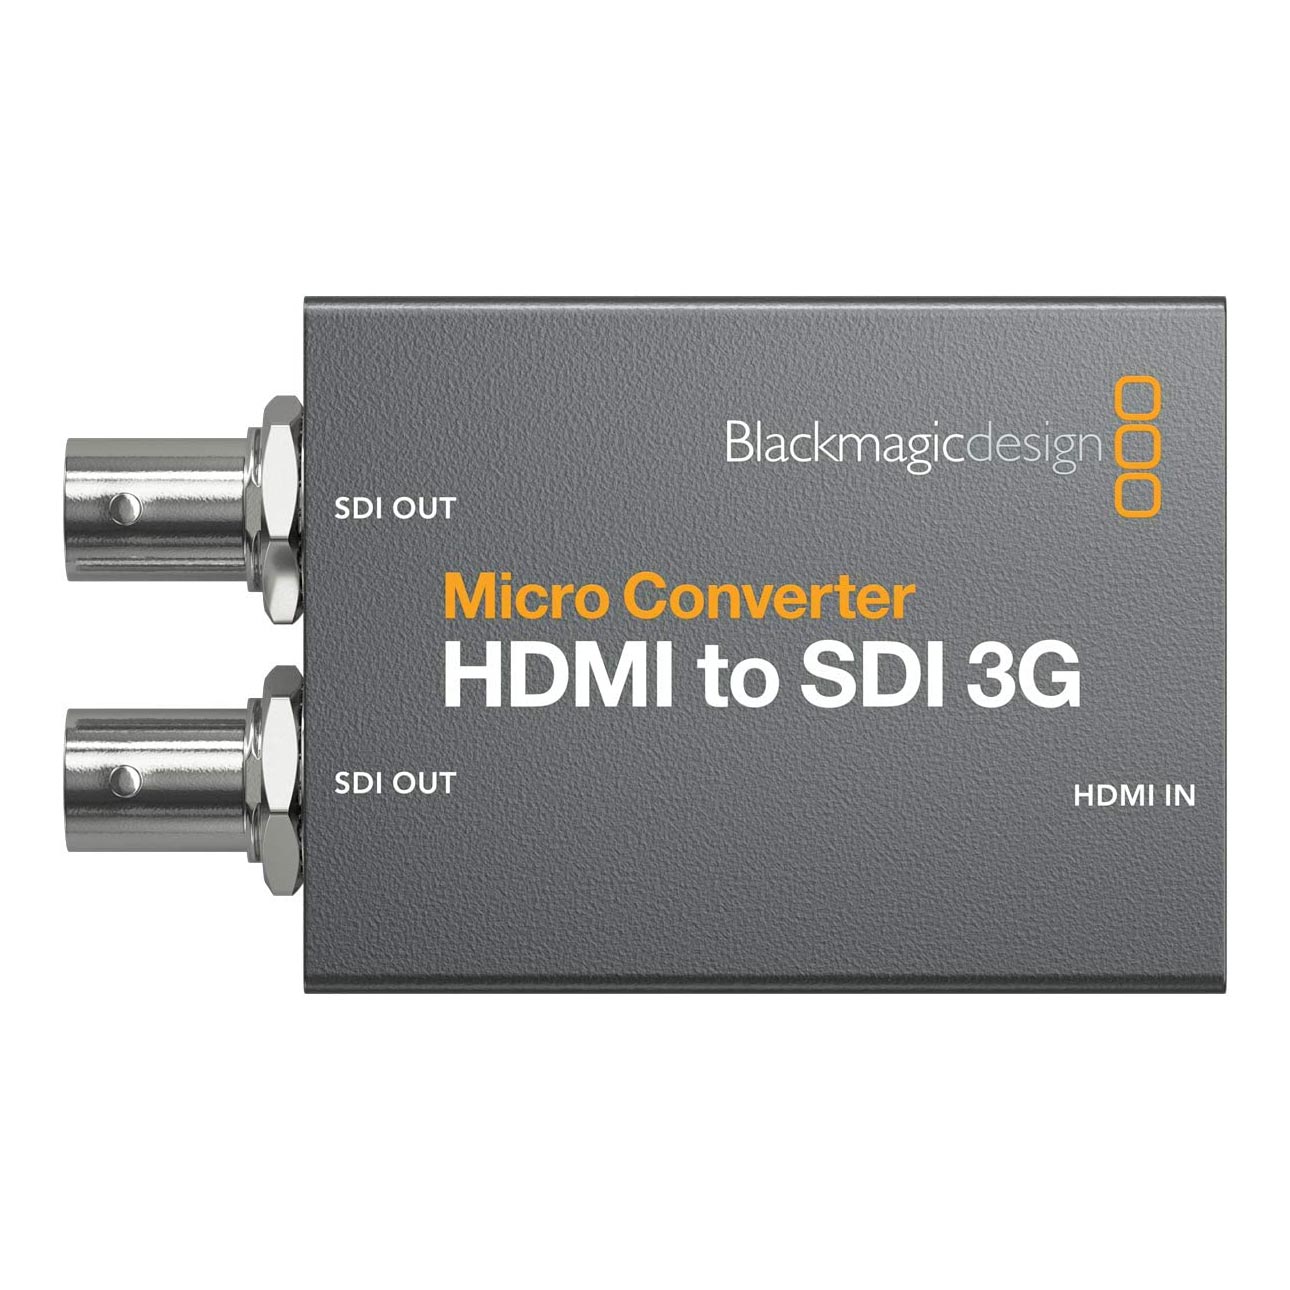 Конвертер Blackmagic Design Micro Converter HDMI to SDI 3G PSU sdi scaler audio video converter sdi bnc to hdmi with sdi loop adapter support sd hd 3g sdi free shipping